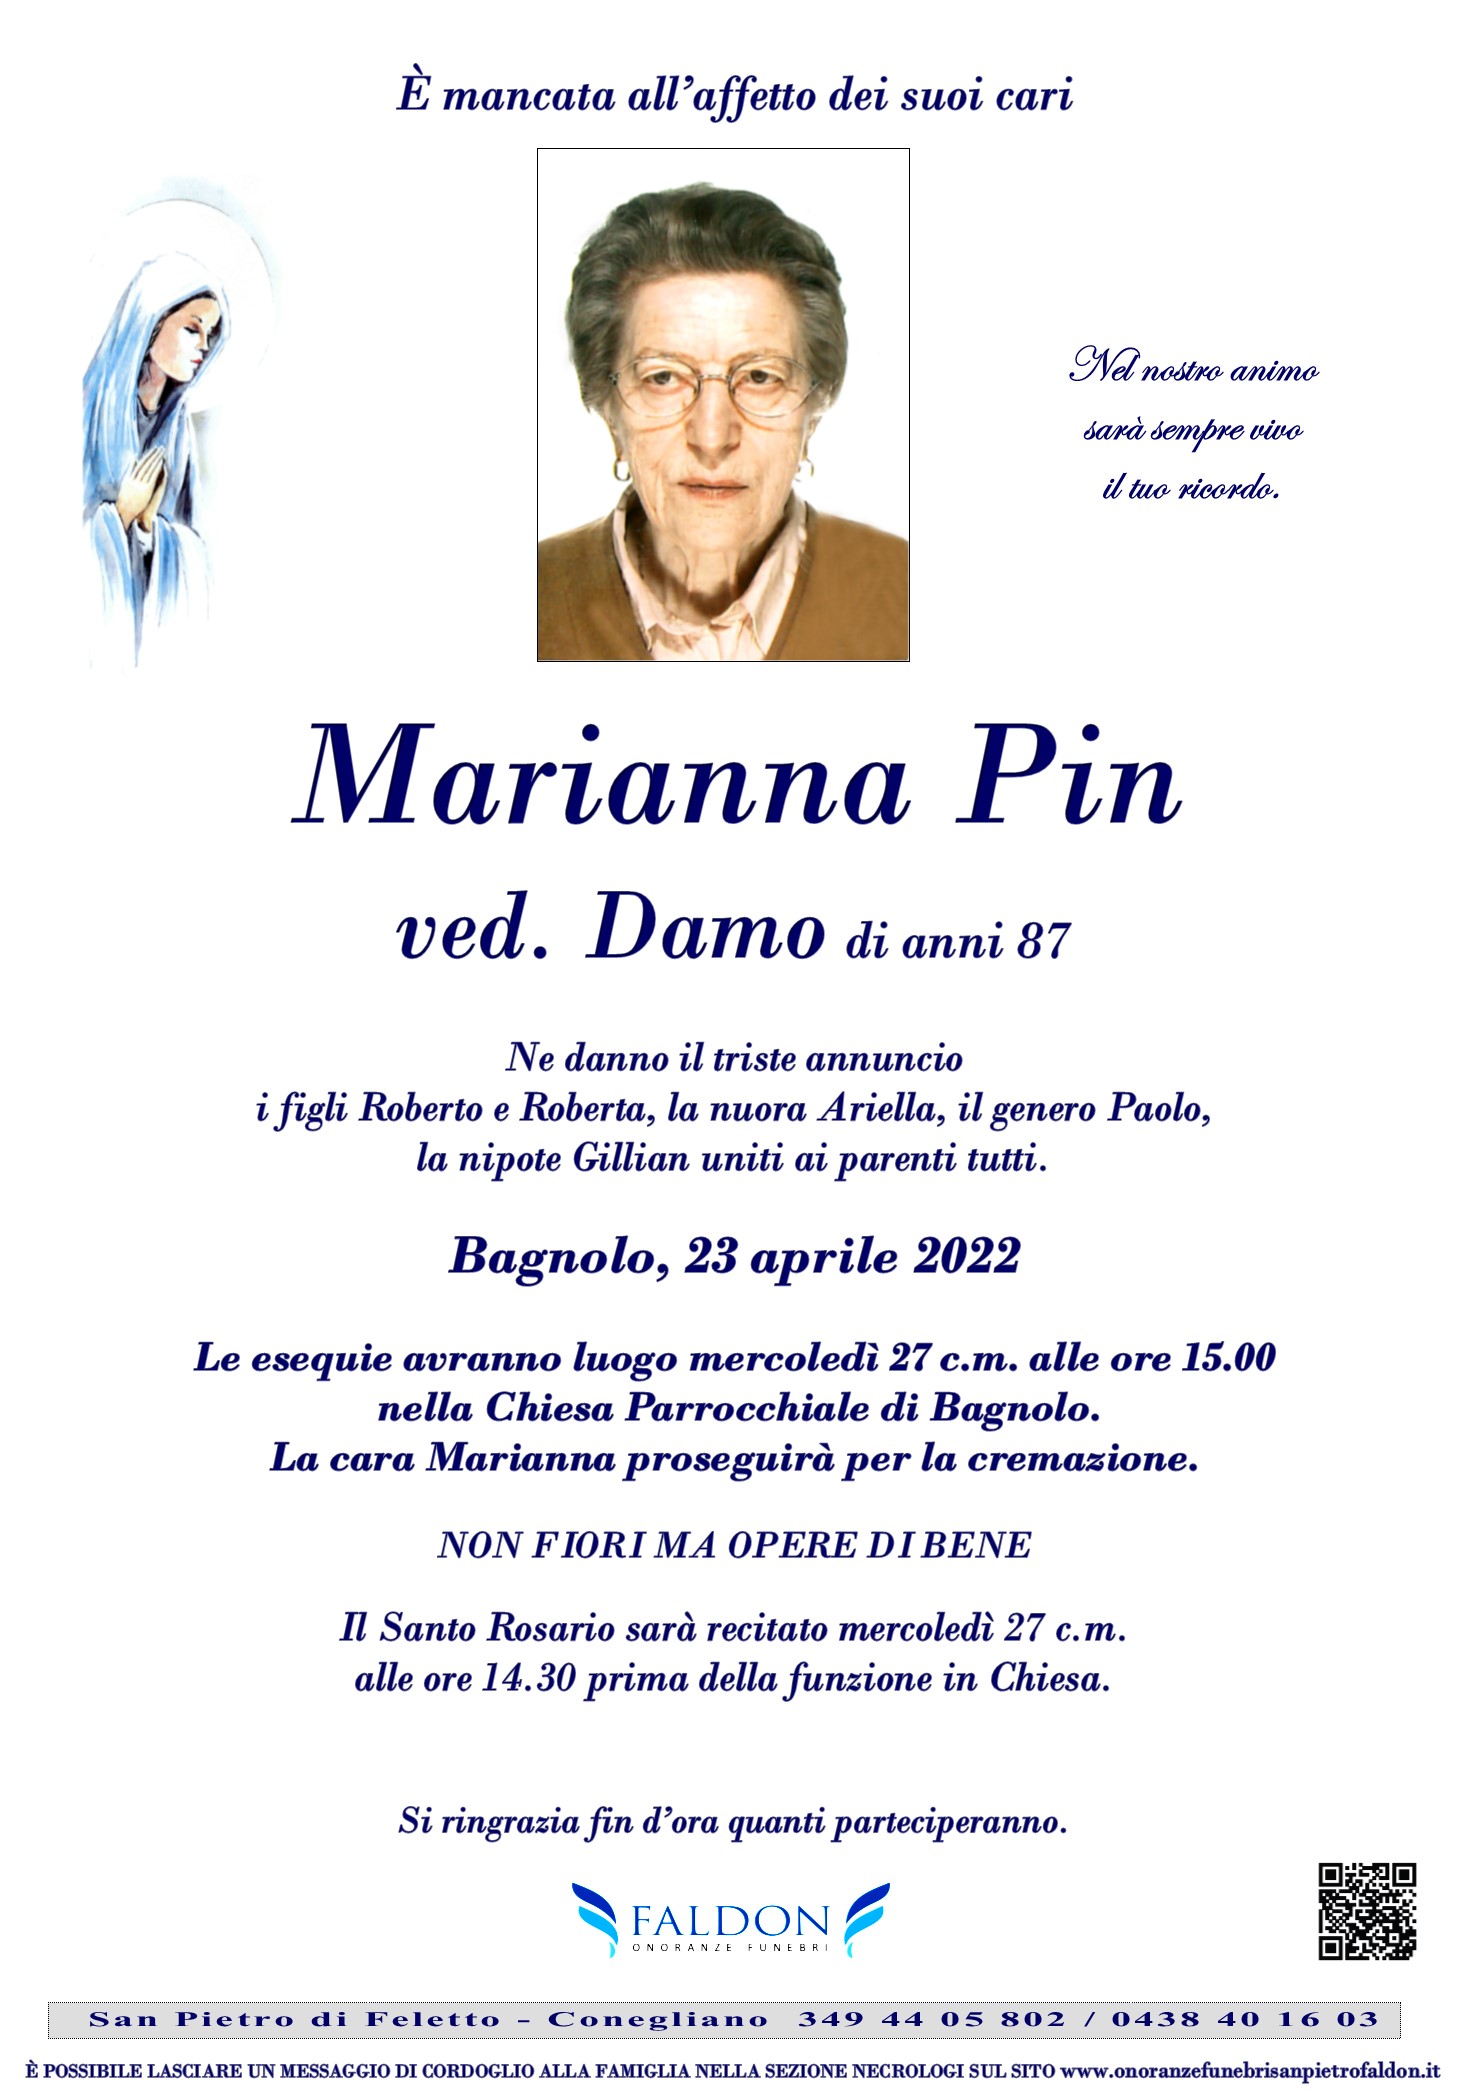 Marianna Pin